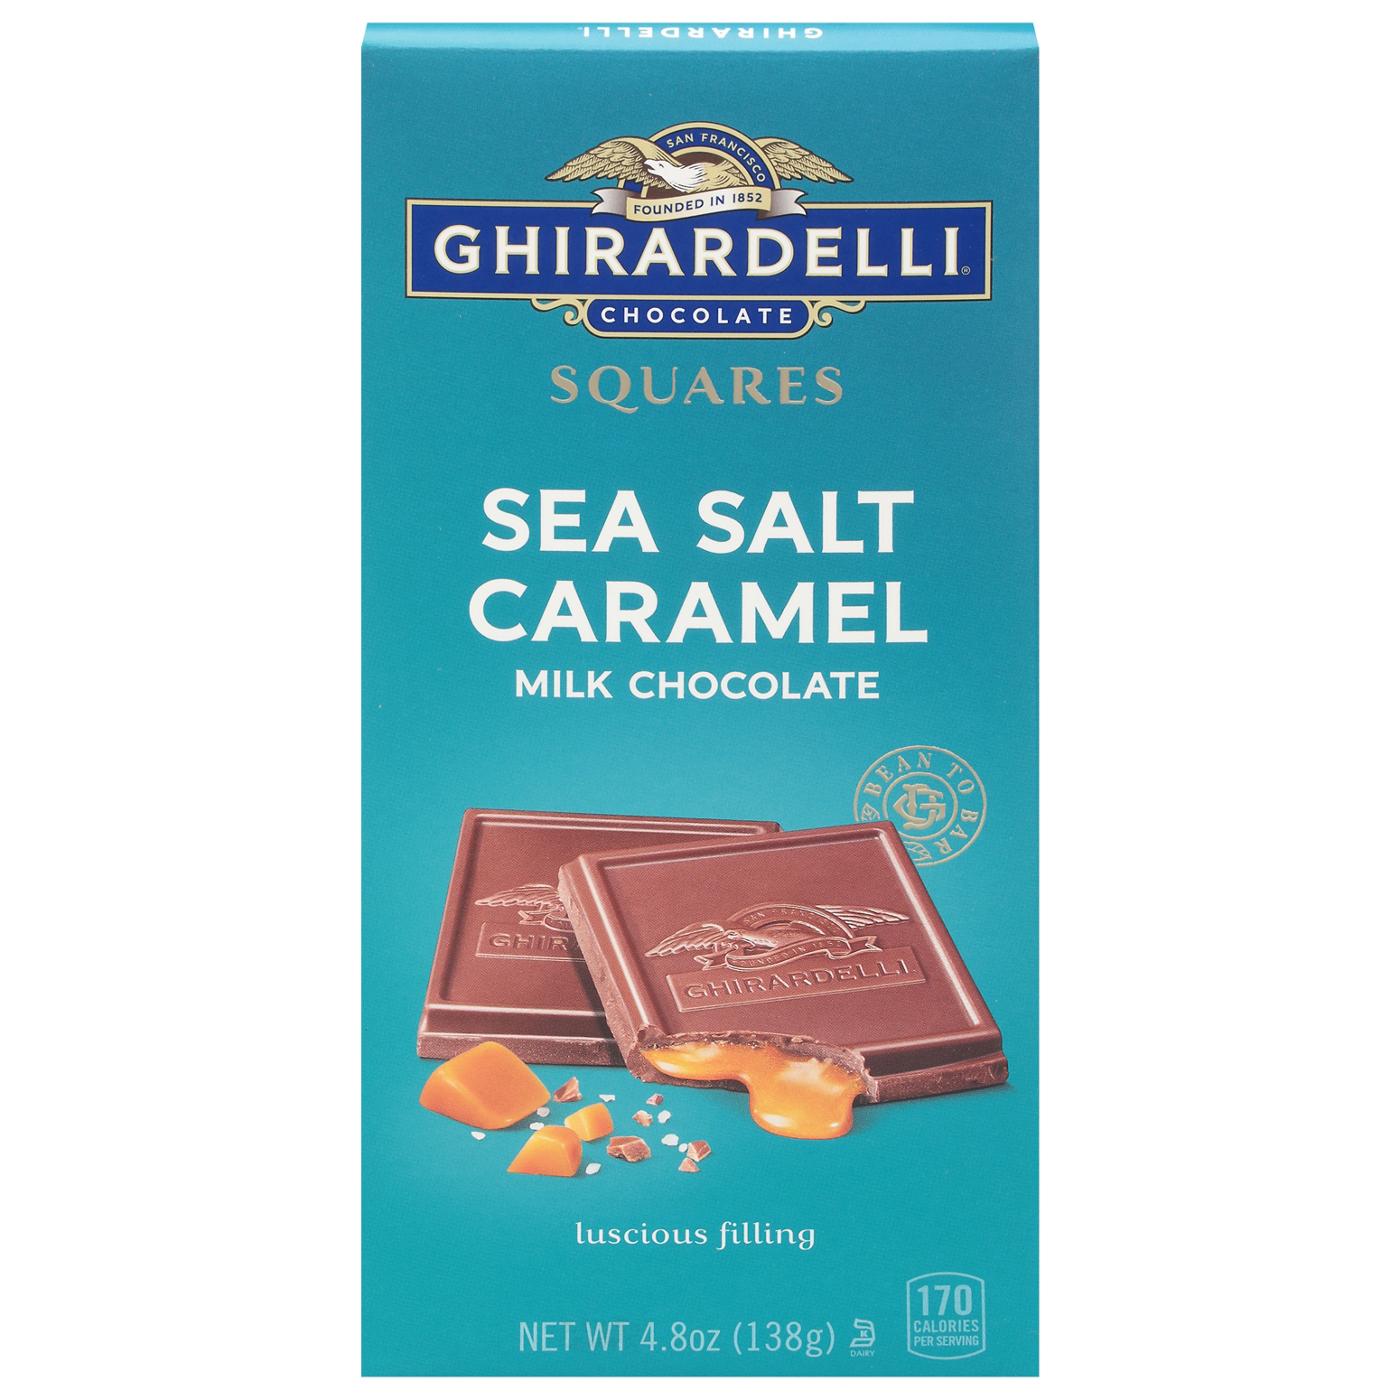 Ghirardelli Squares Sea Salt Caramel Milk Chocolate Bar; image 1 of 3